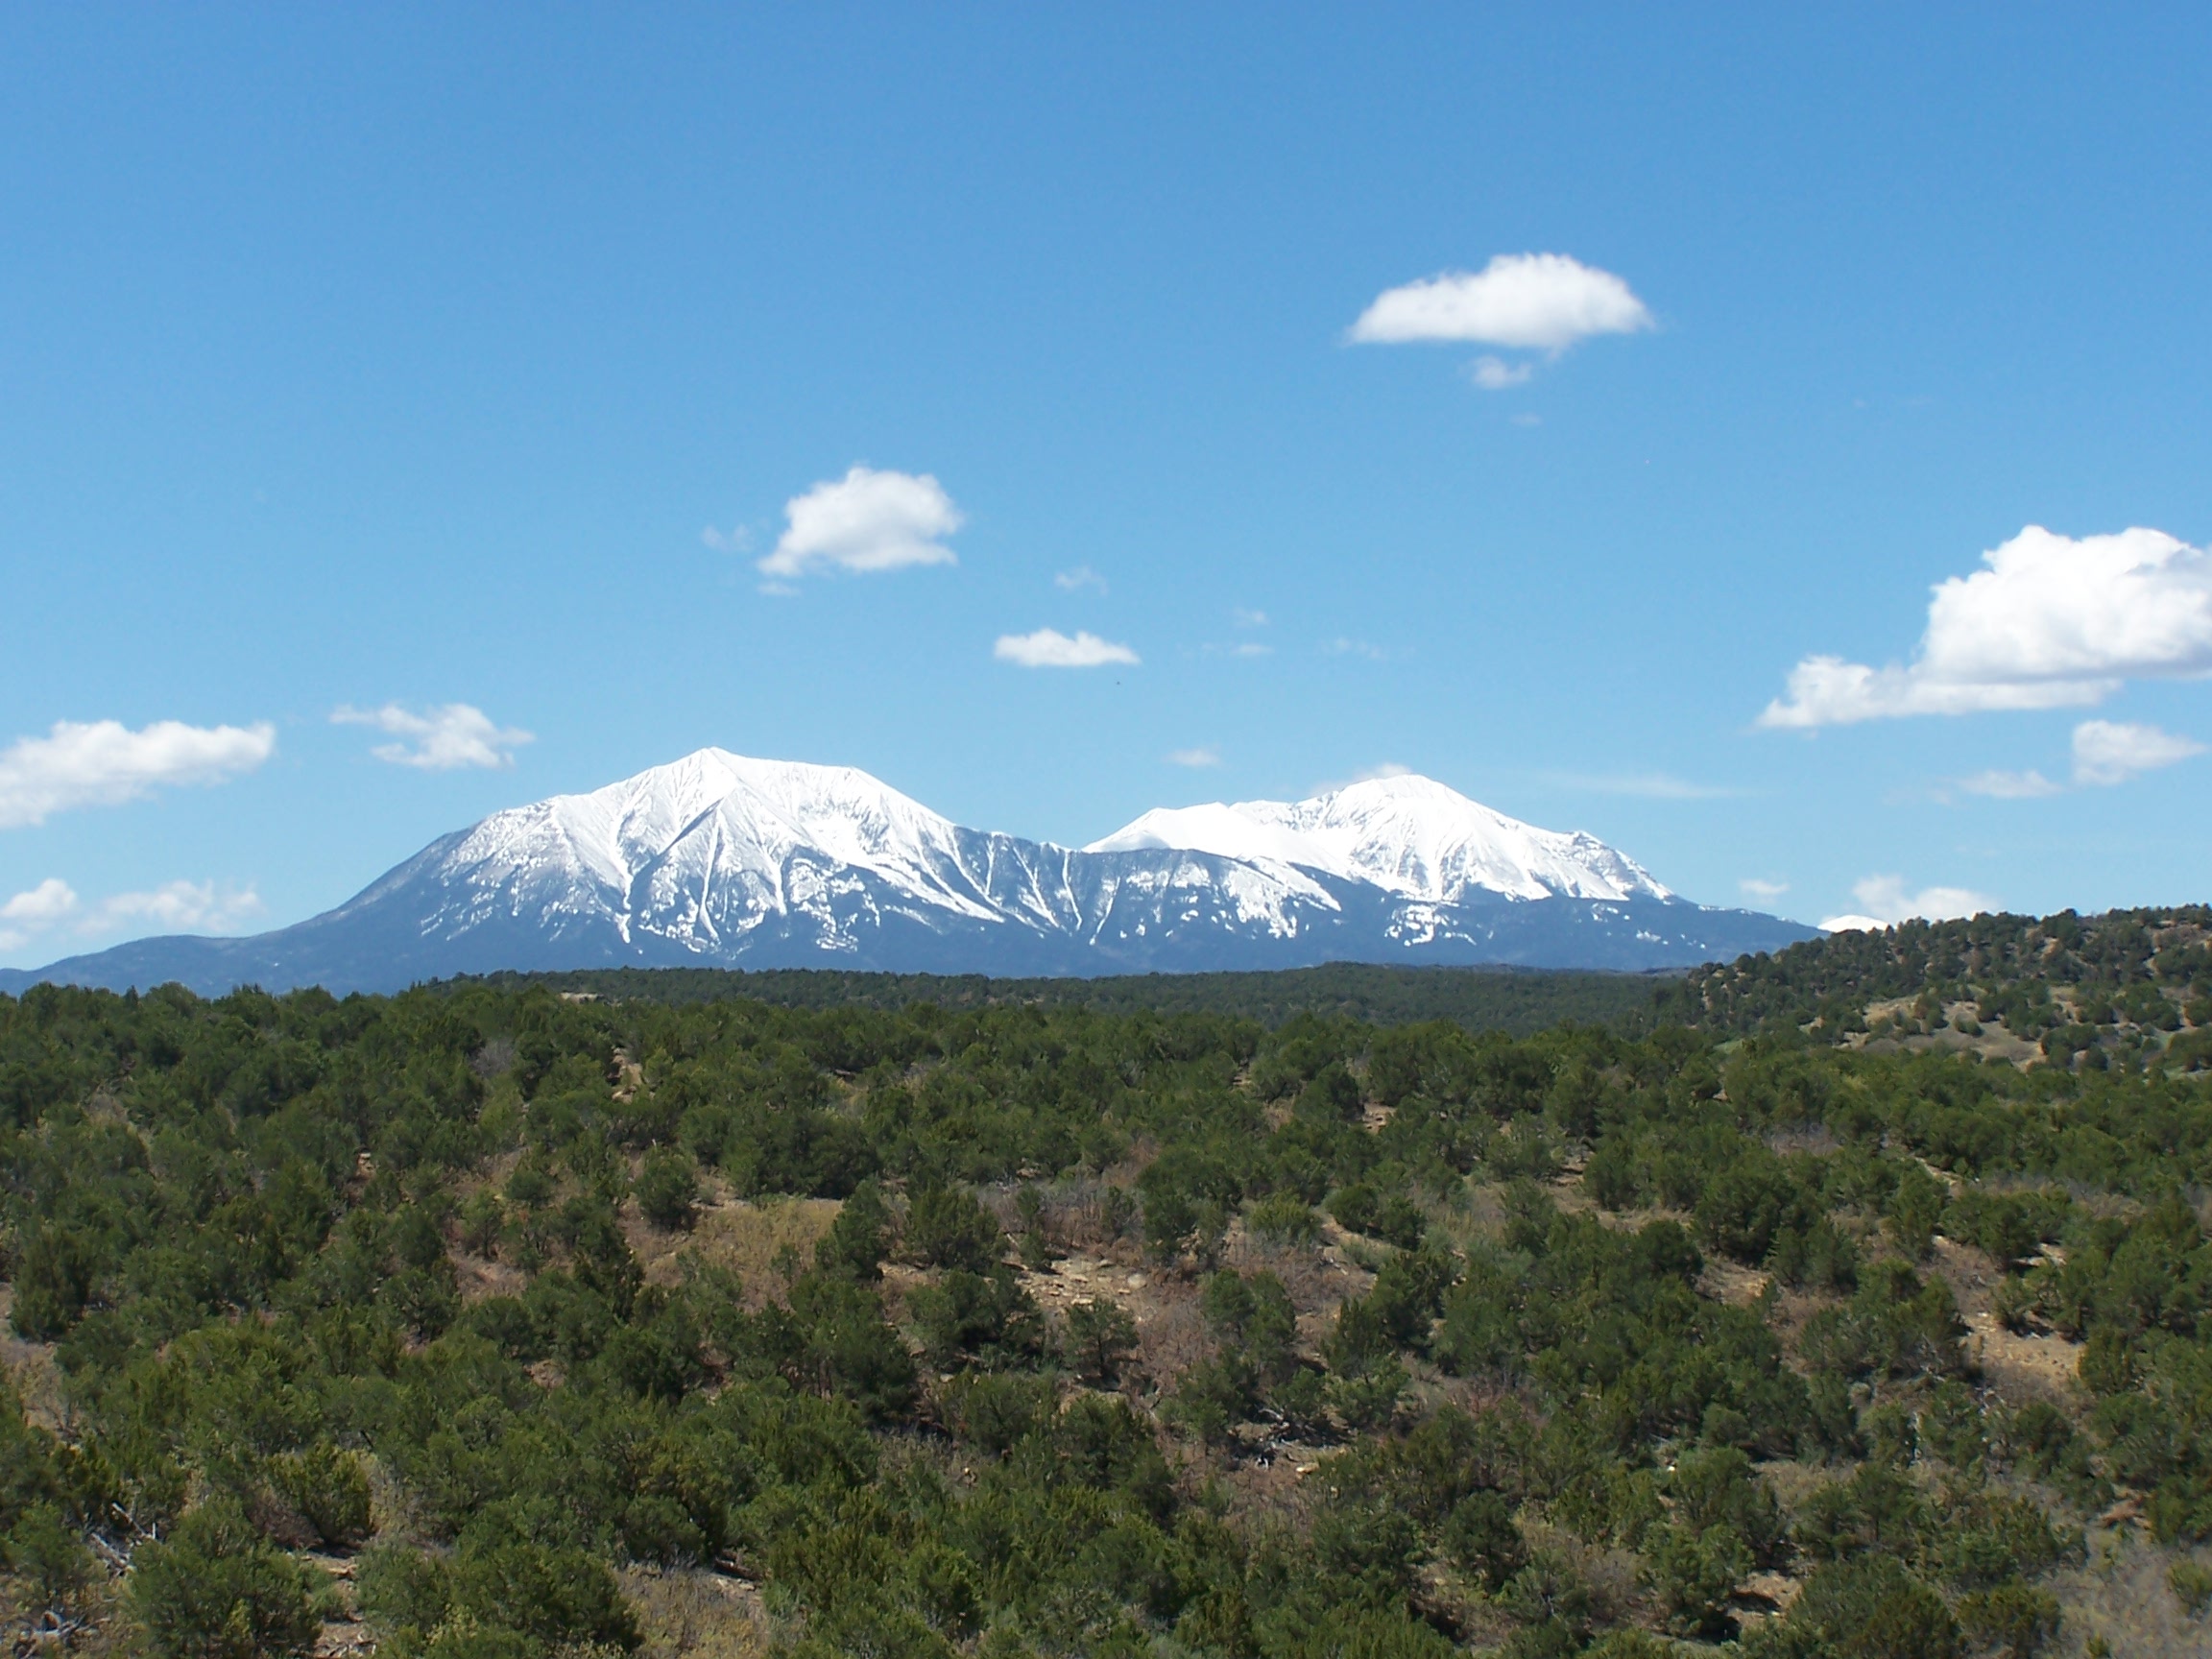 Colorado Mountain Land for Sale - COLORADO LAND SPECIALIST